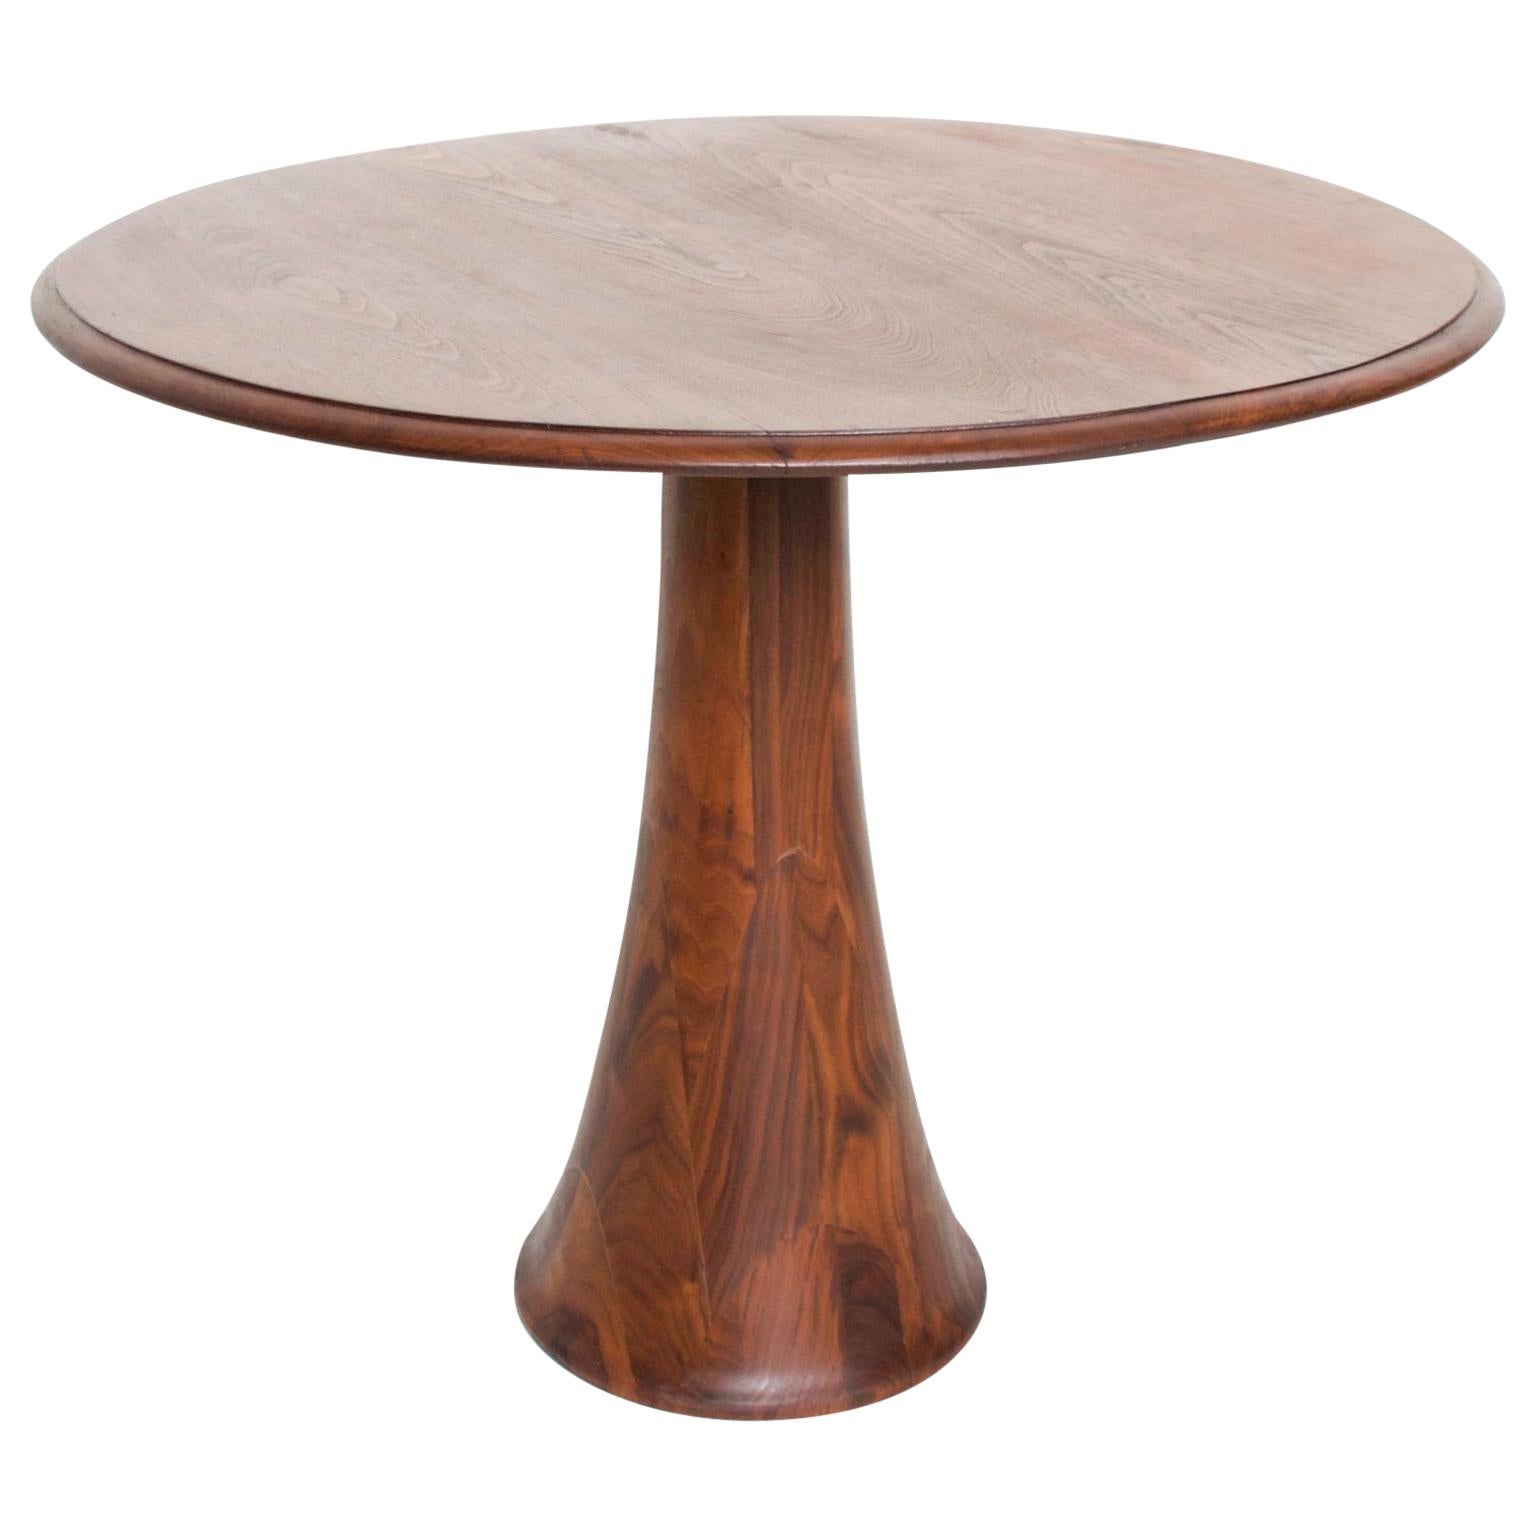 Solid Walnut Sculptural Round Table Mid-Century Modern Period